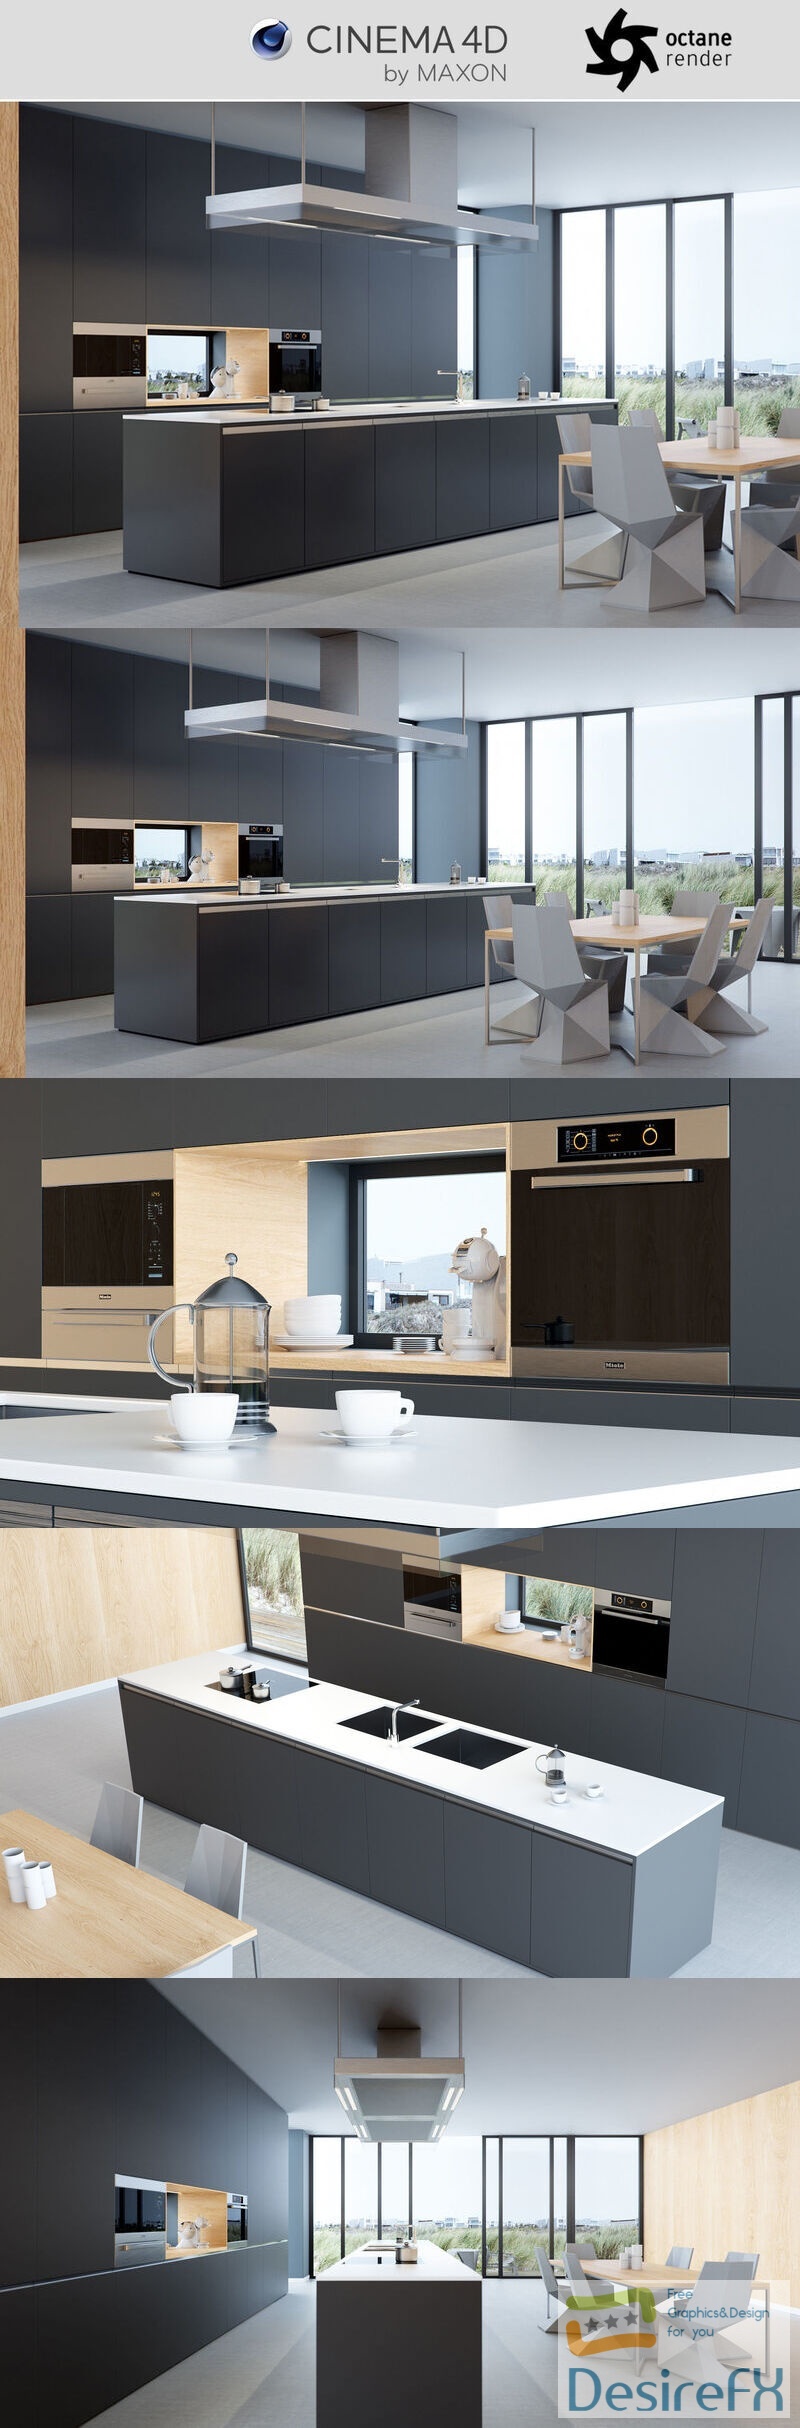 Octane - C4D  Minimalist Kitchen Interior Scene 3D Model